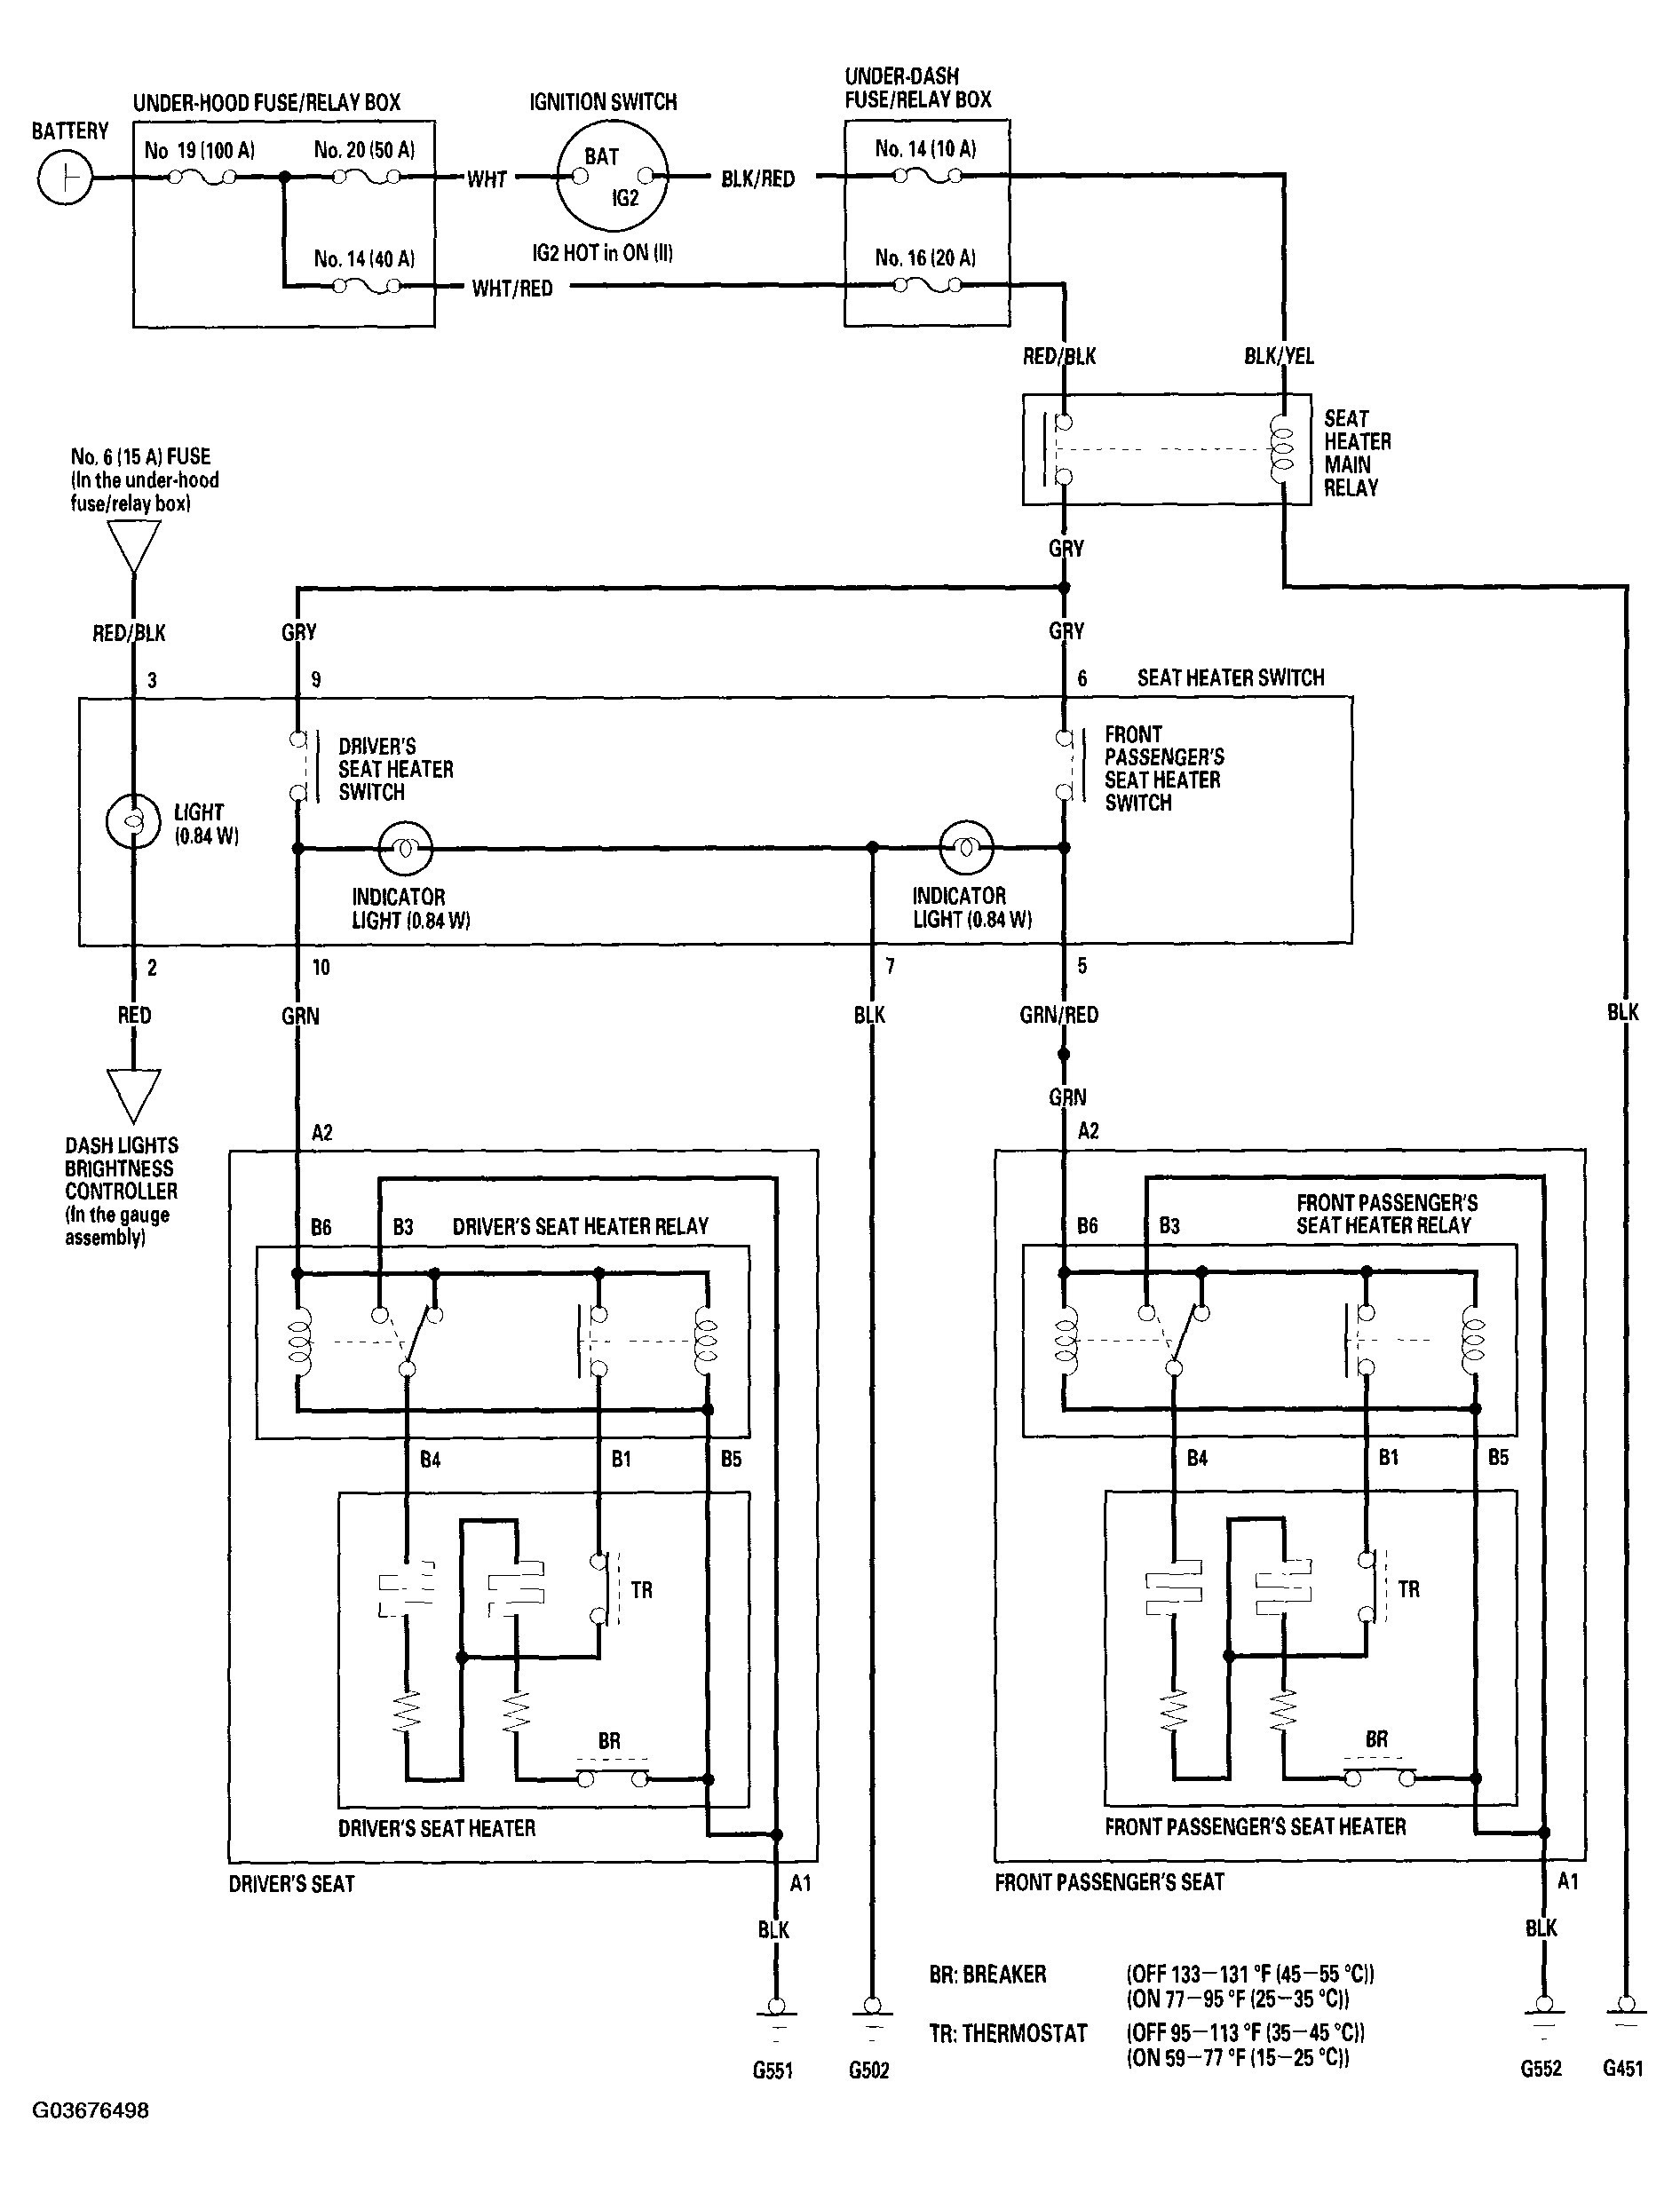 95 Accord Engine Diagram - Wiring Diagram Networks